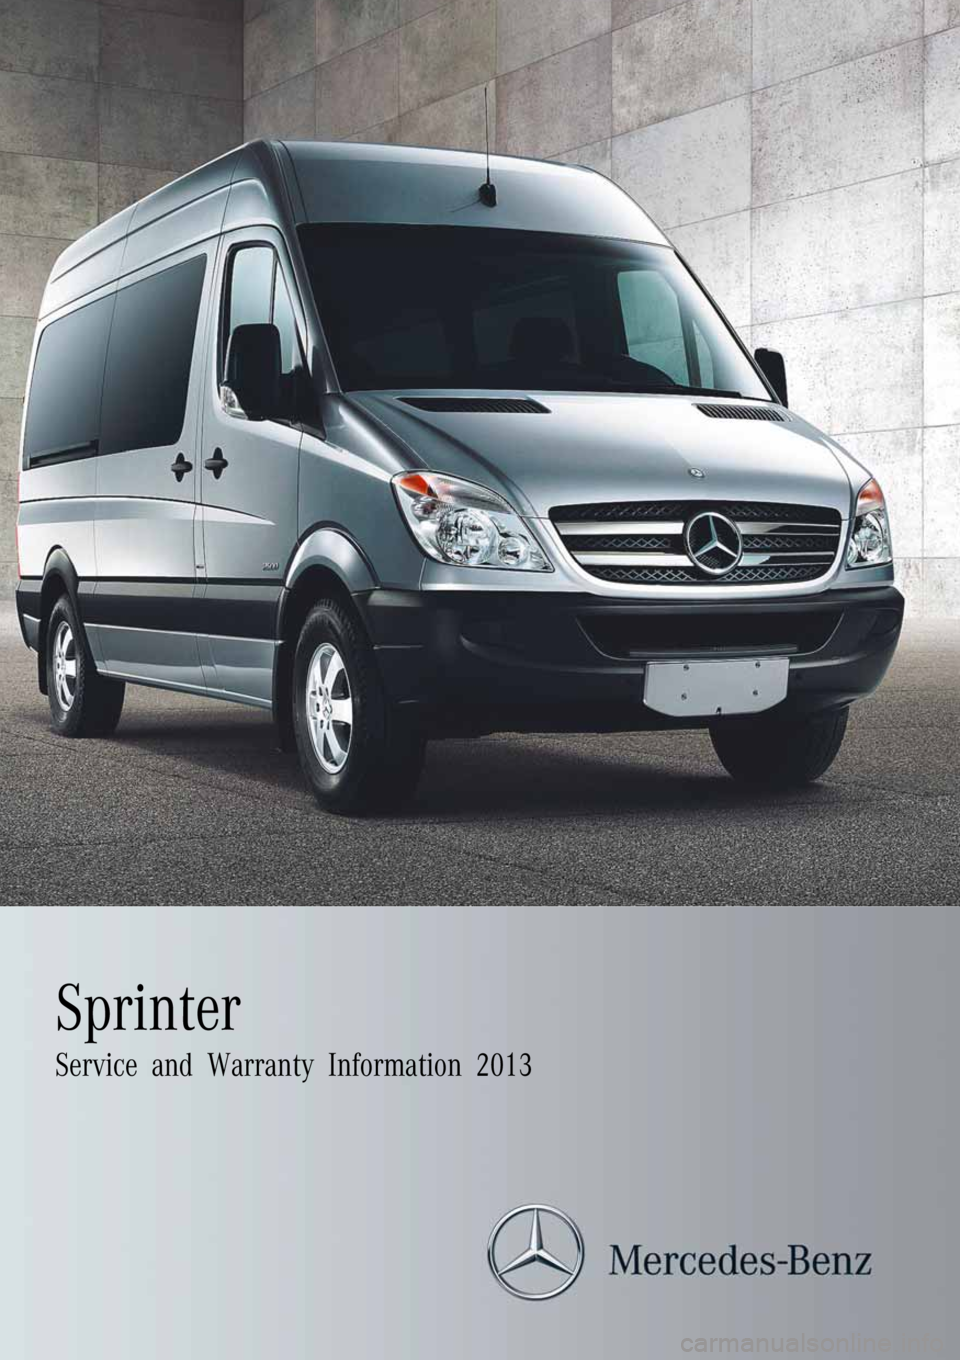 MERCEDES-BENZ SPRINTER 2013  MY13 Warranty Manual Sprinter
Service and Warranty Information 2013 